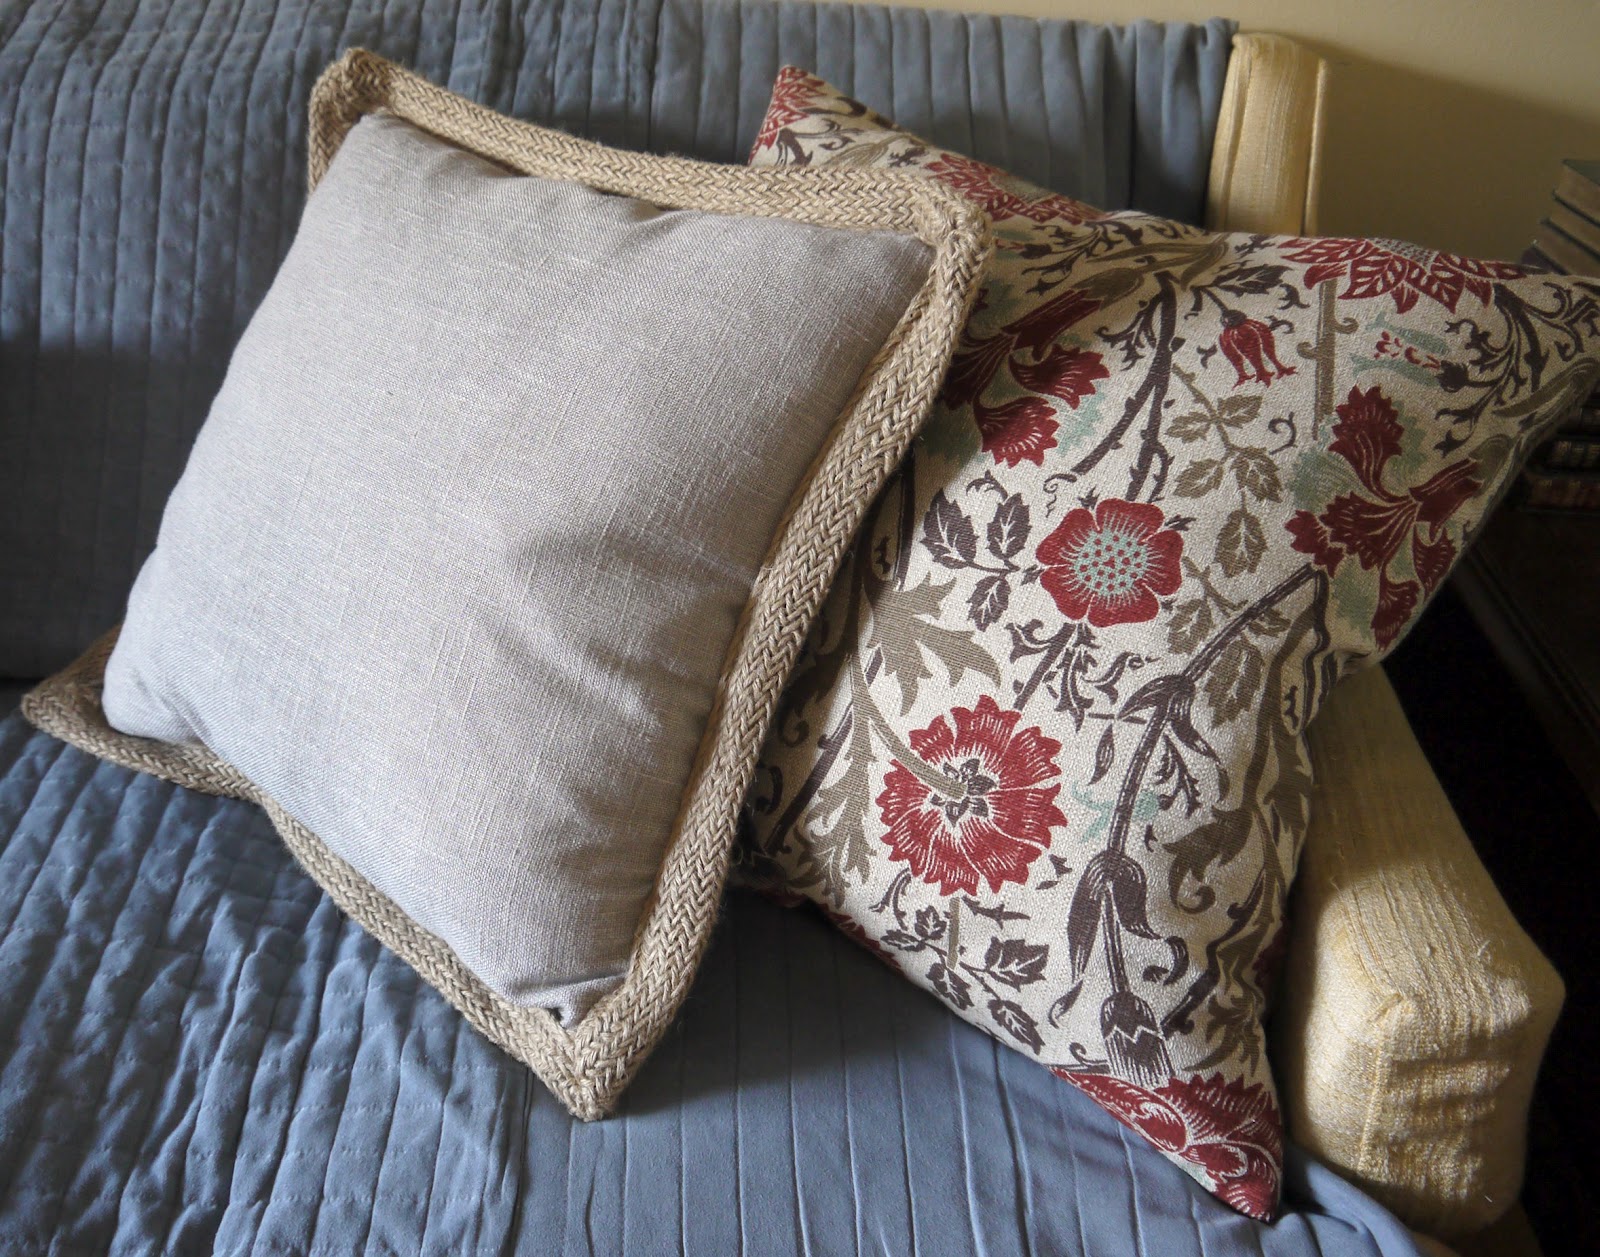 living room cushions ideas